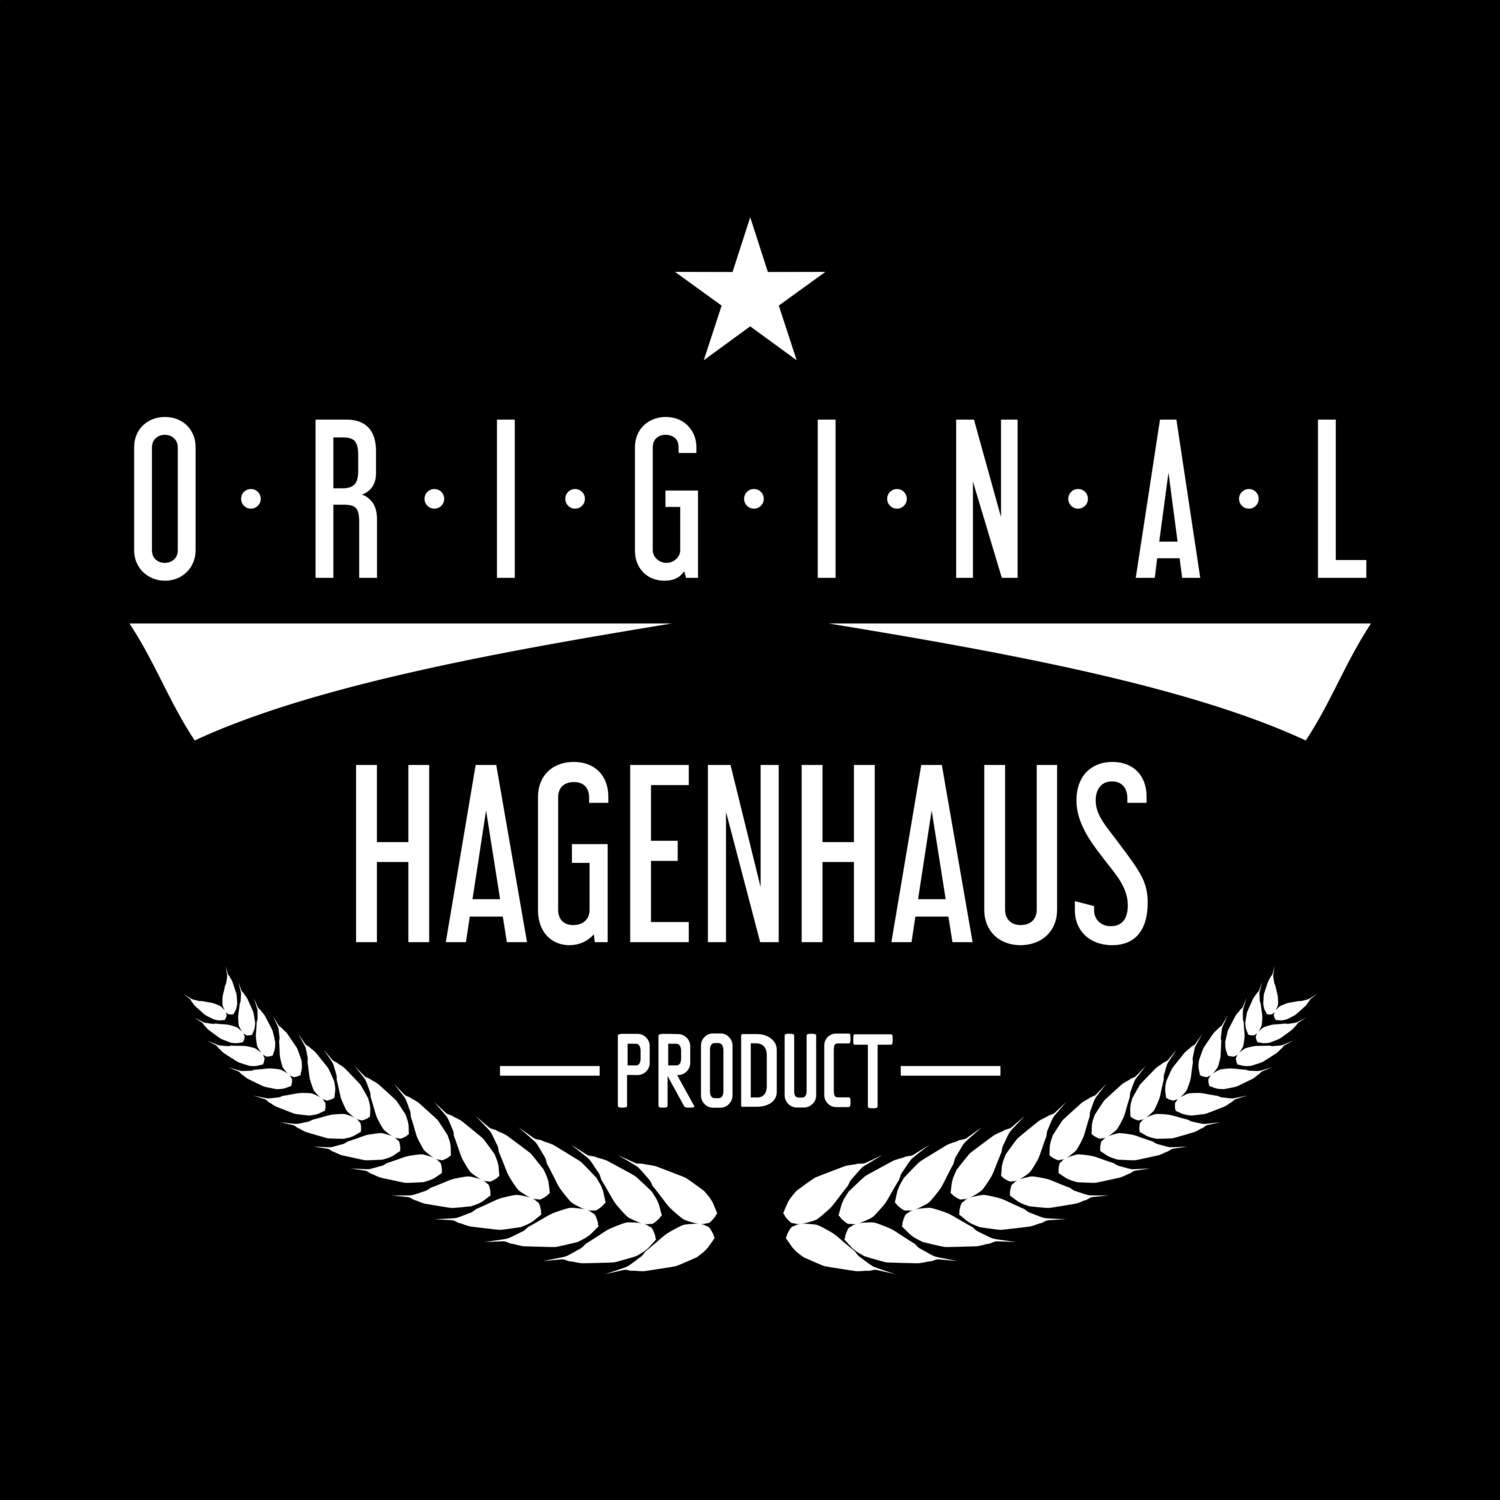 Hagenhaus T-Shirt »Original Product«